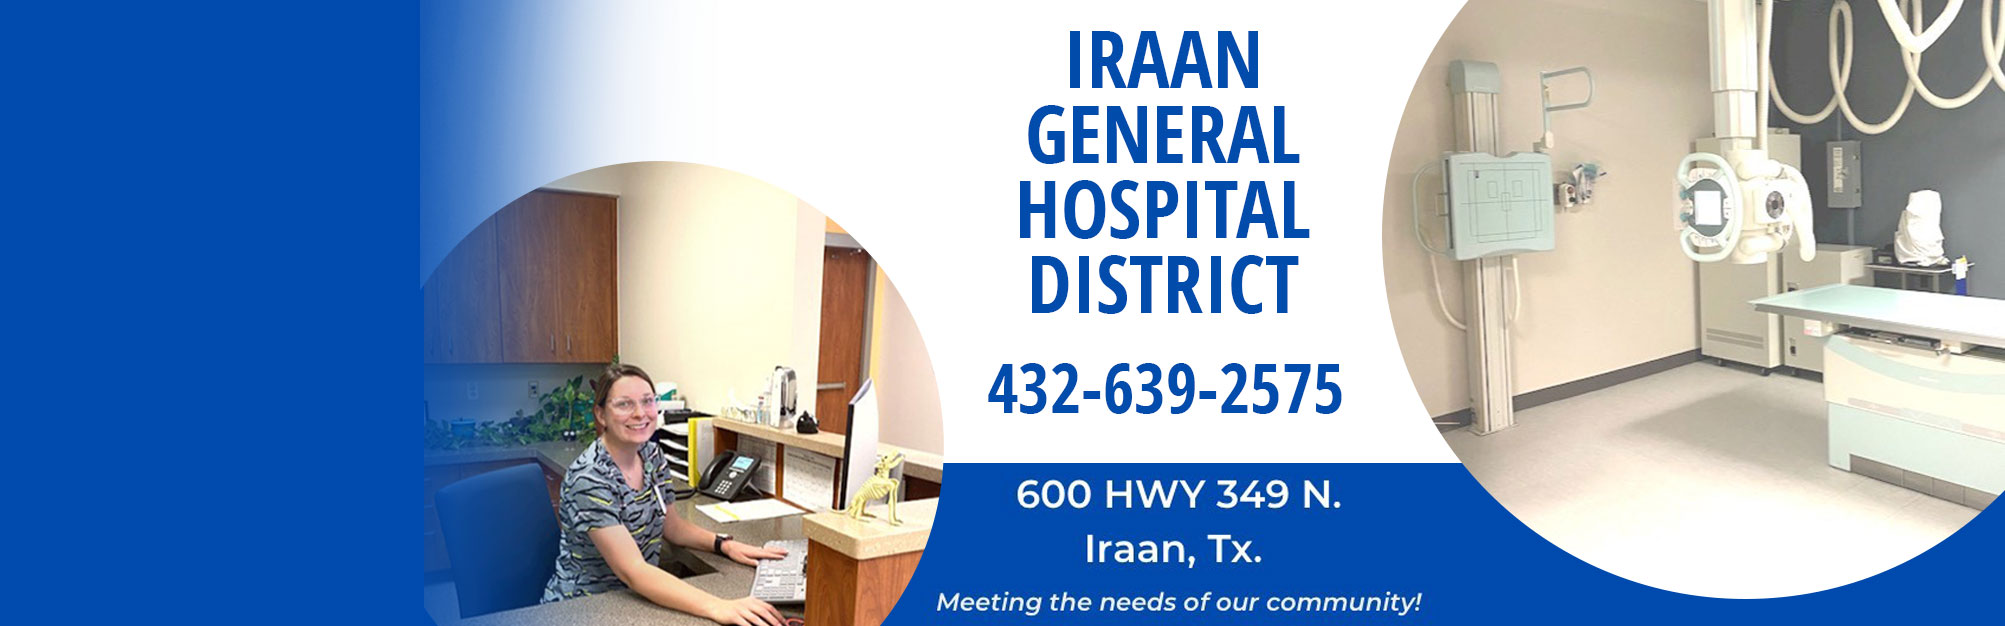 Iraan General Hospital District
432-639-2575